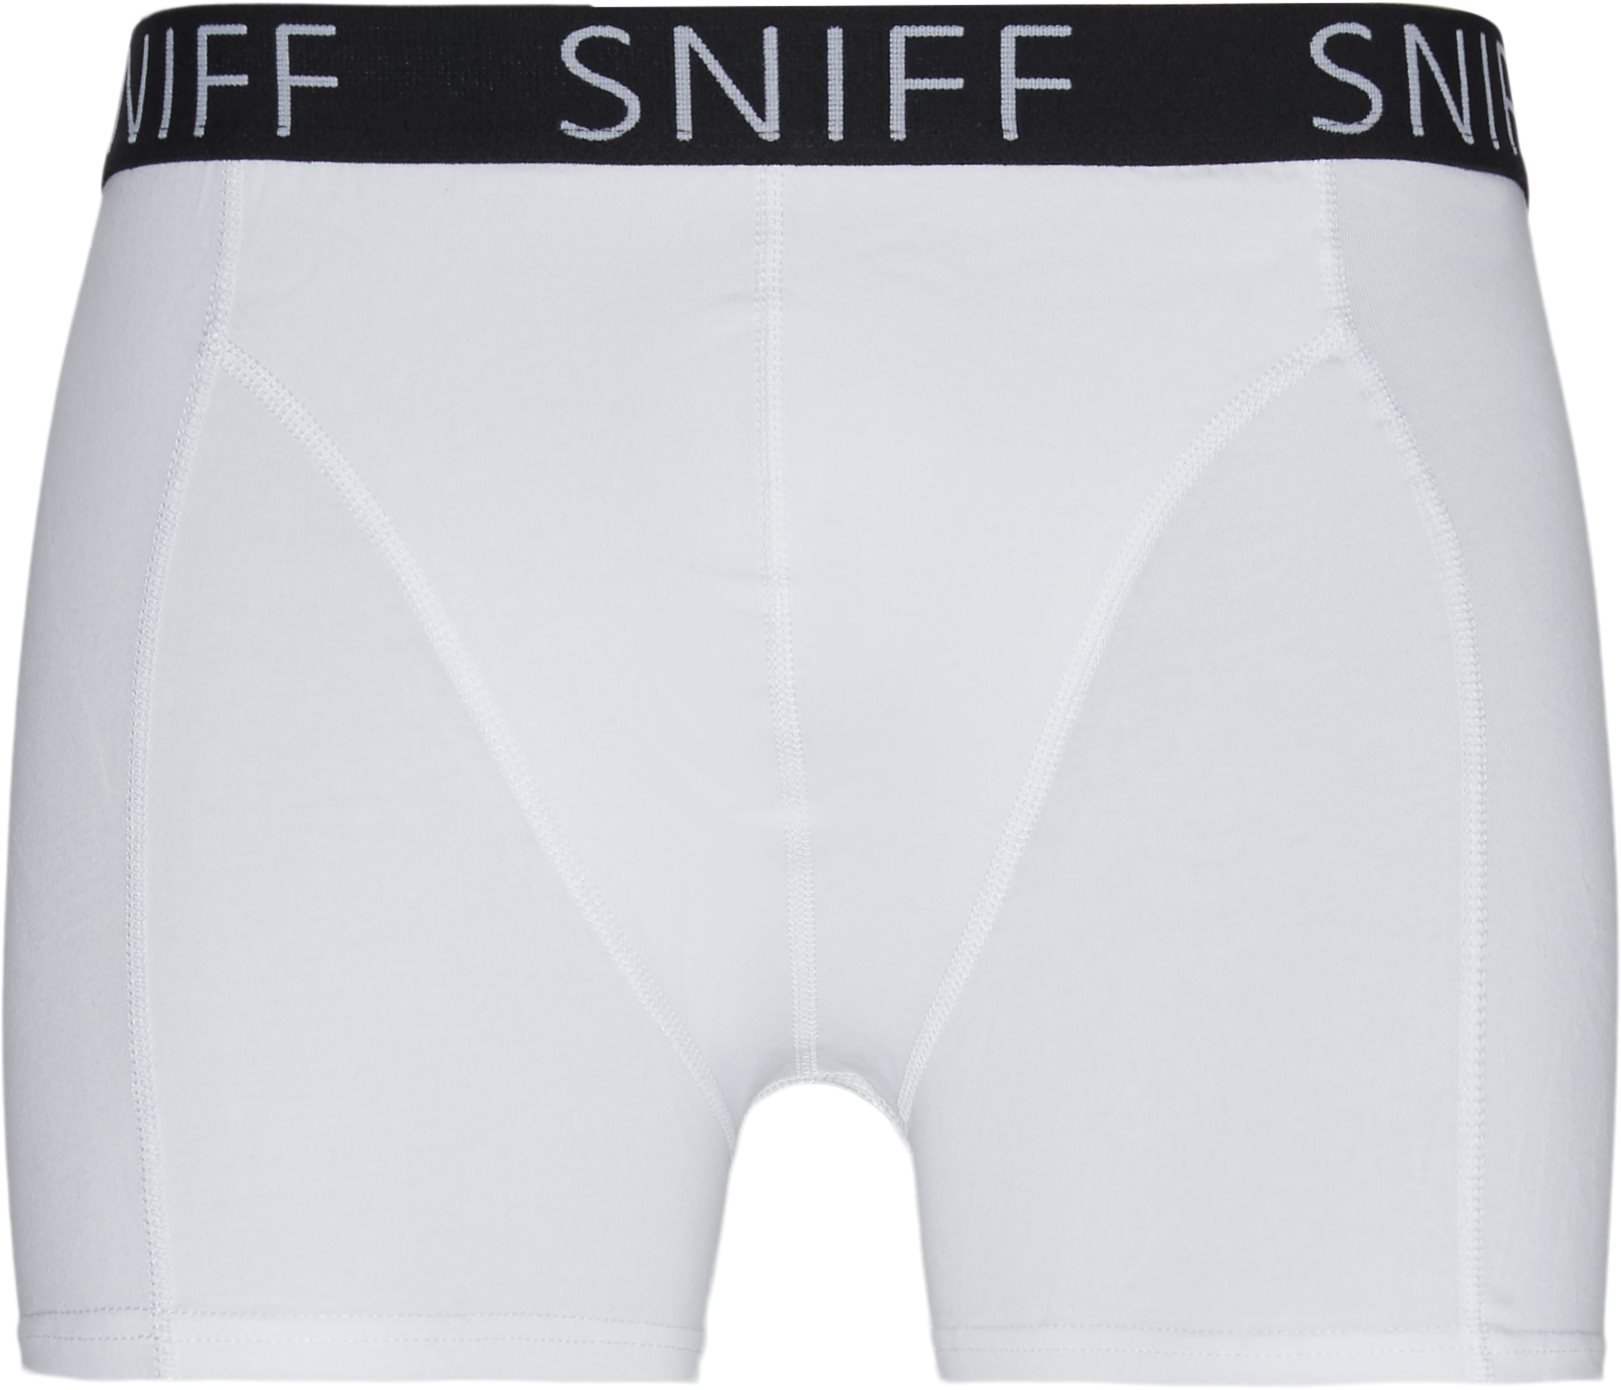 Sniff Undertøj TIGHTS 88010 Hvid